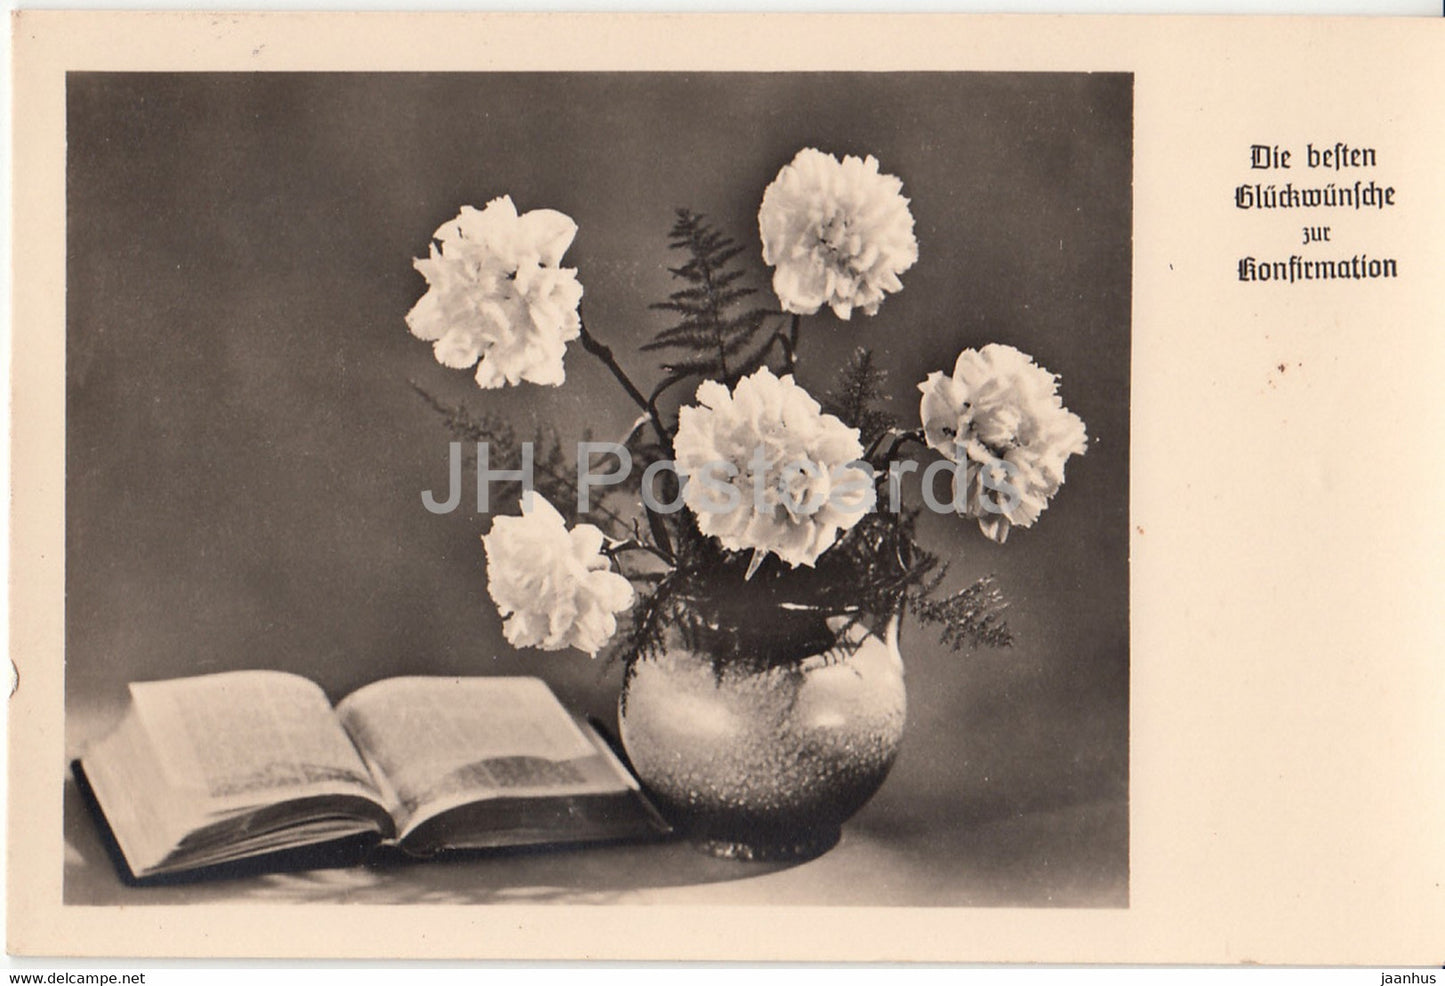 Greeting Card - Die Besten Gluckwunsche zur Konfirmation - carnation - flowers - 1951 - old postcard - Germany - used - JH Postcards